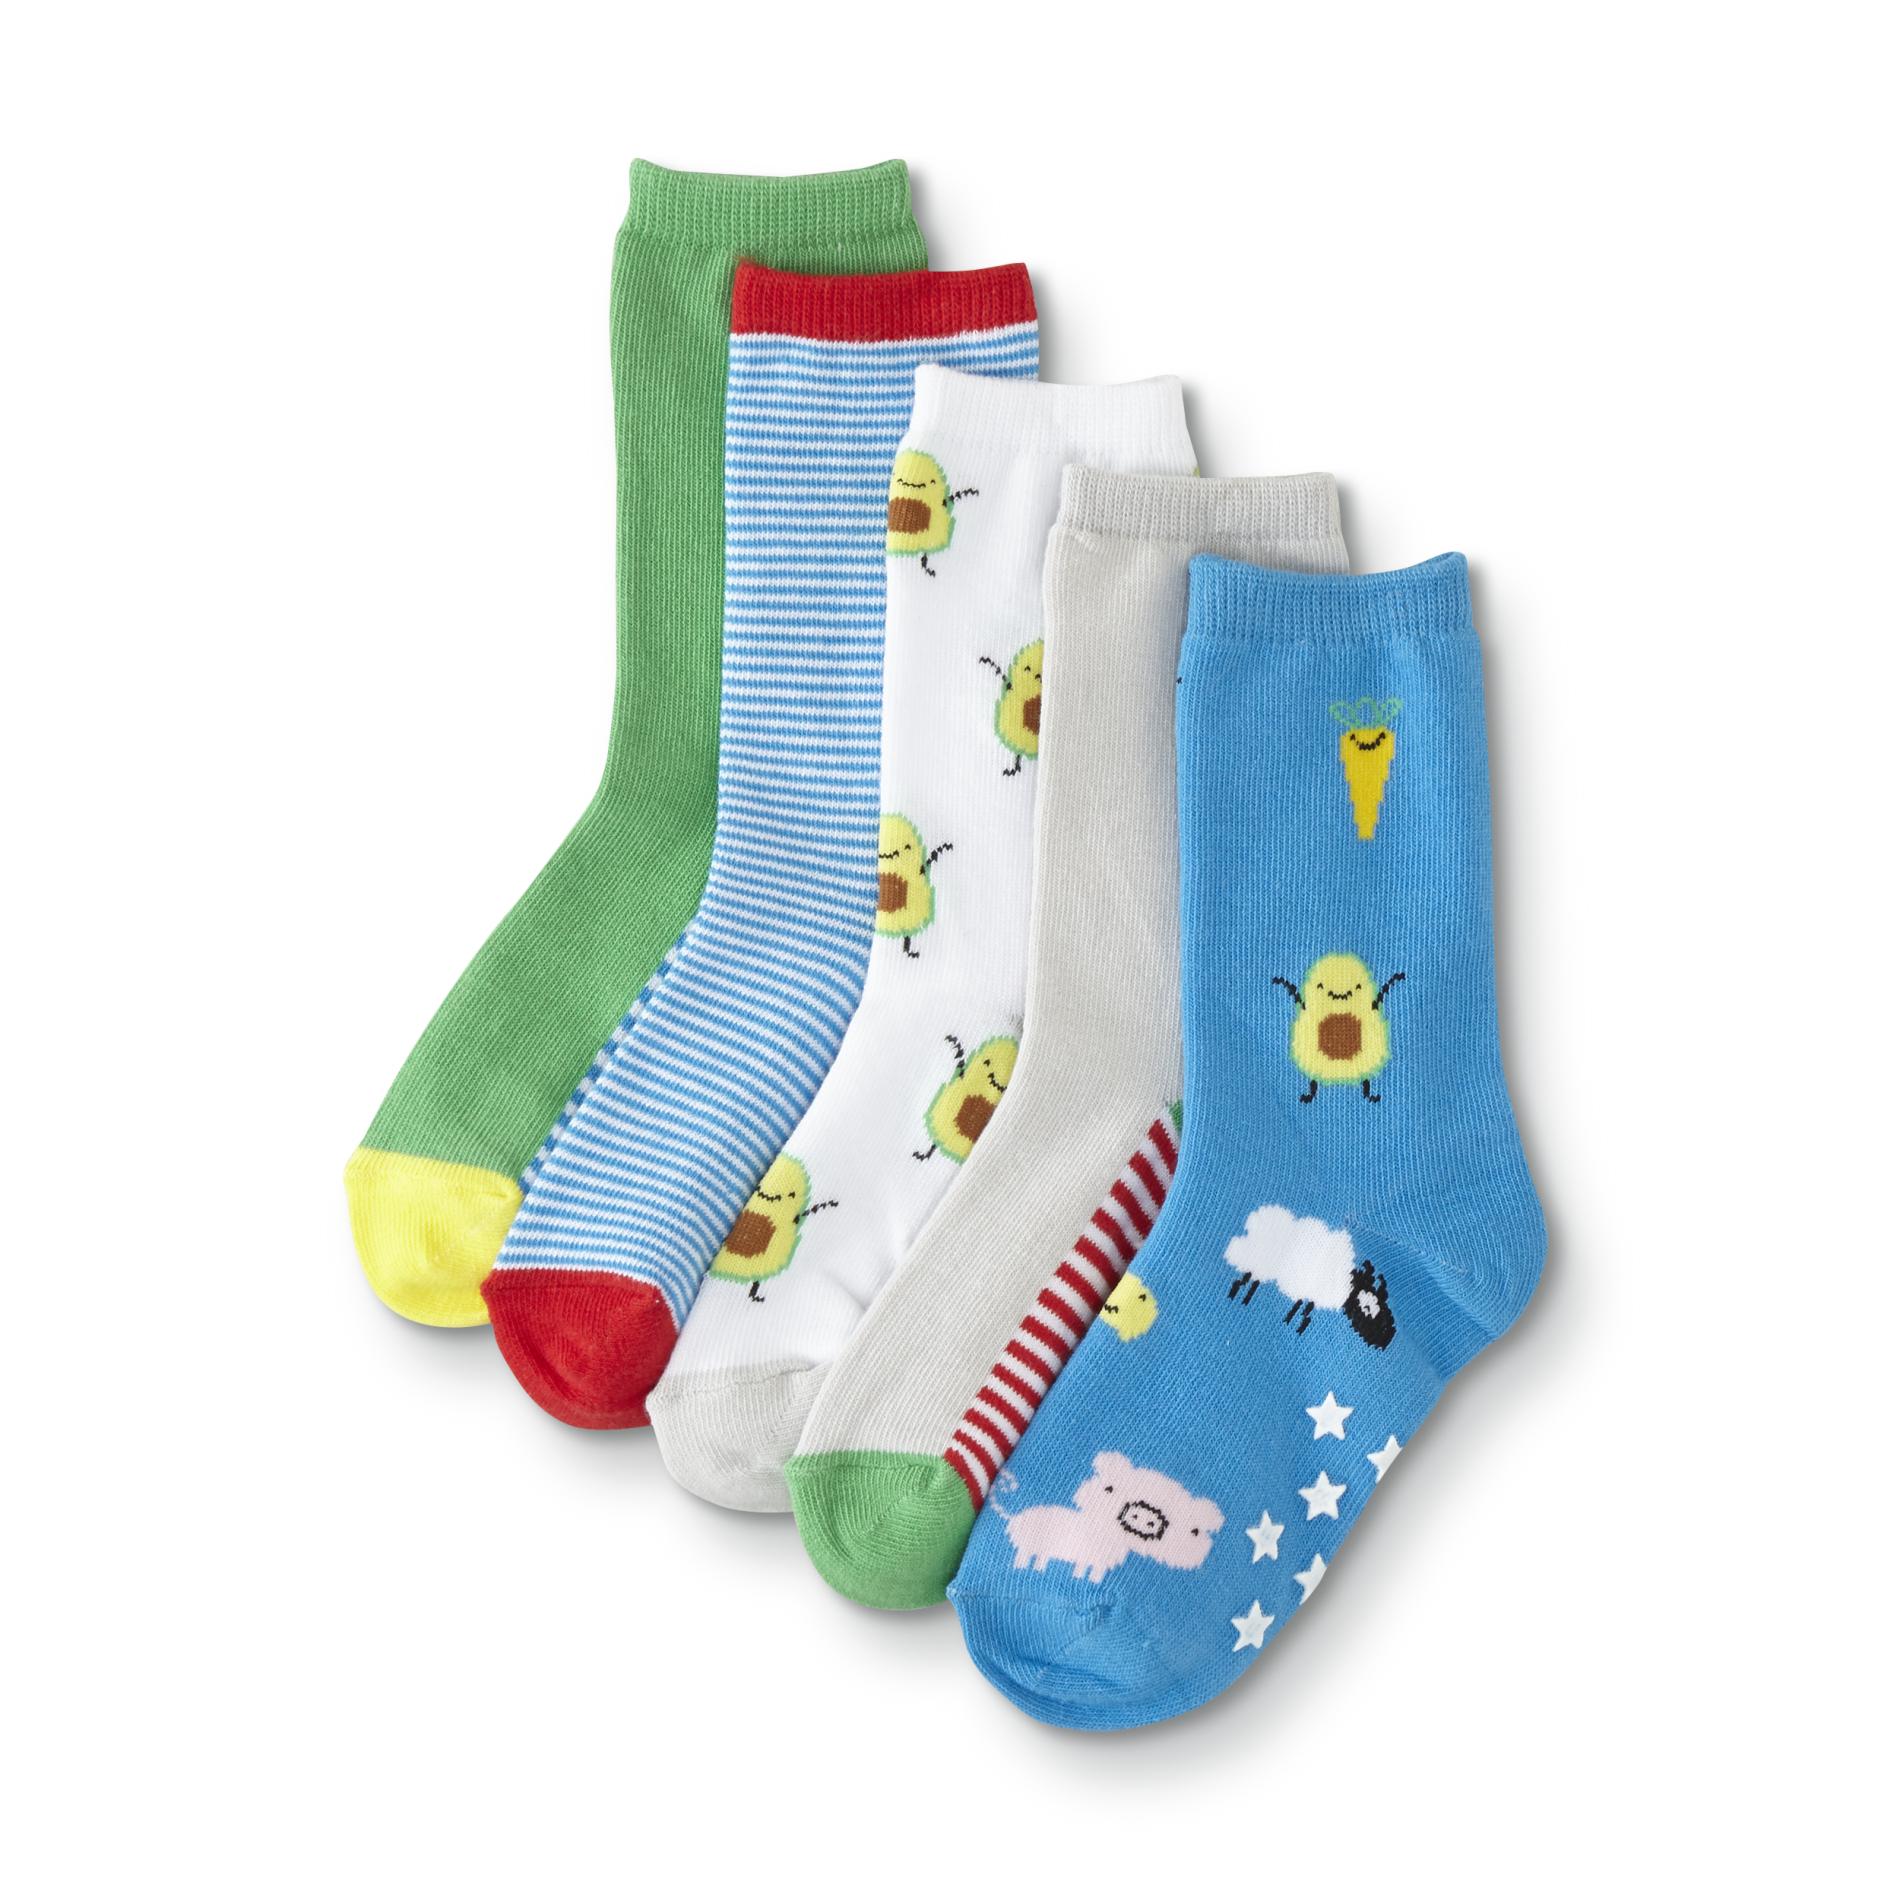 Toddler Boys' 5-Pairs Crew Socks - Animals & Vegetables